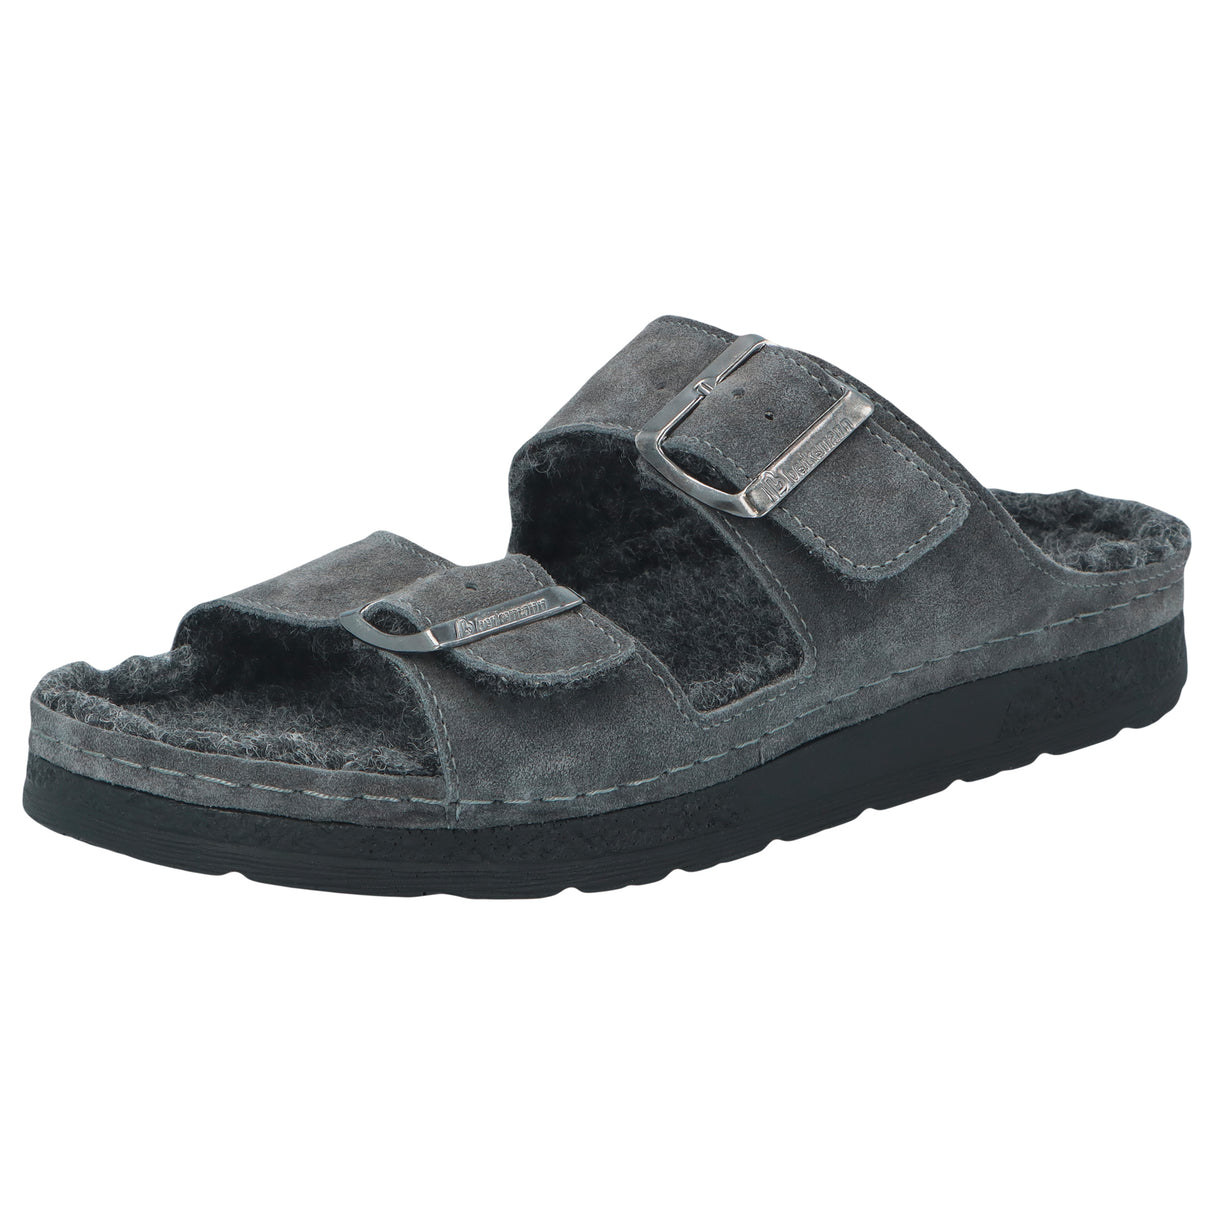 Luisella sandals gray